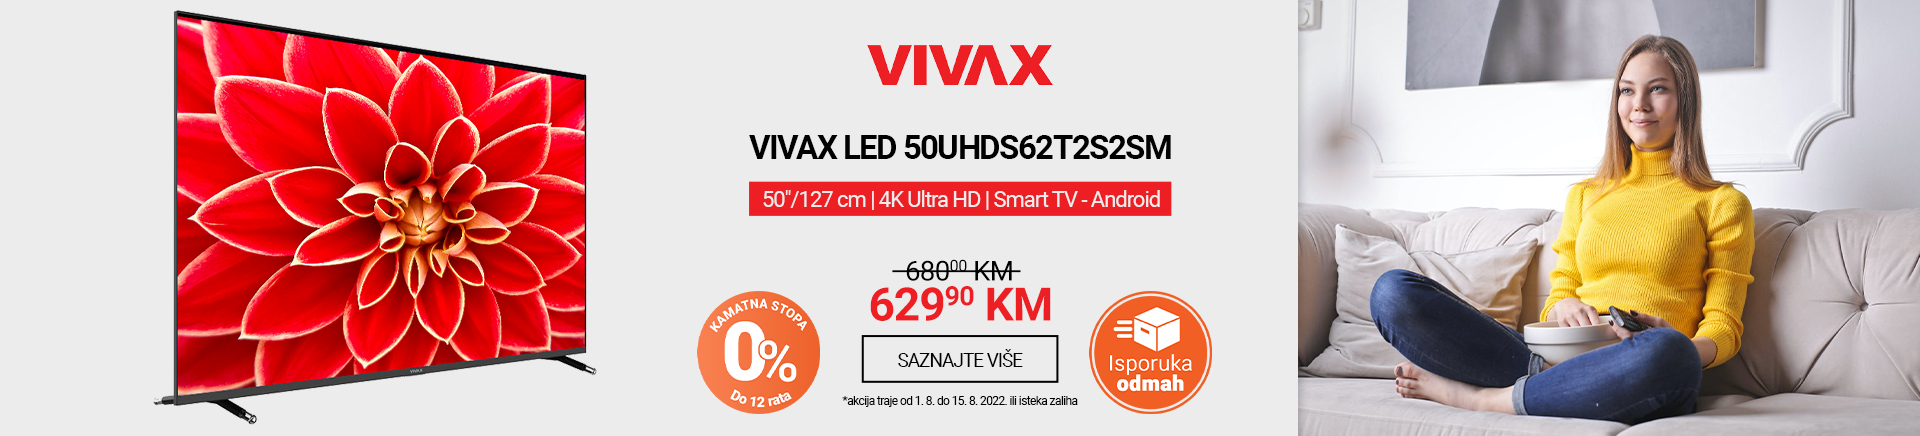 BiH VIVAX IMAGO LED televizor 50UHDS62T2S2SM MOBILE 380 X 436.jpg